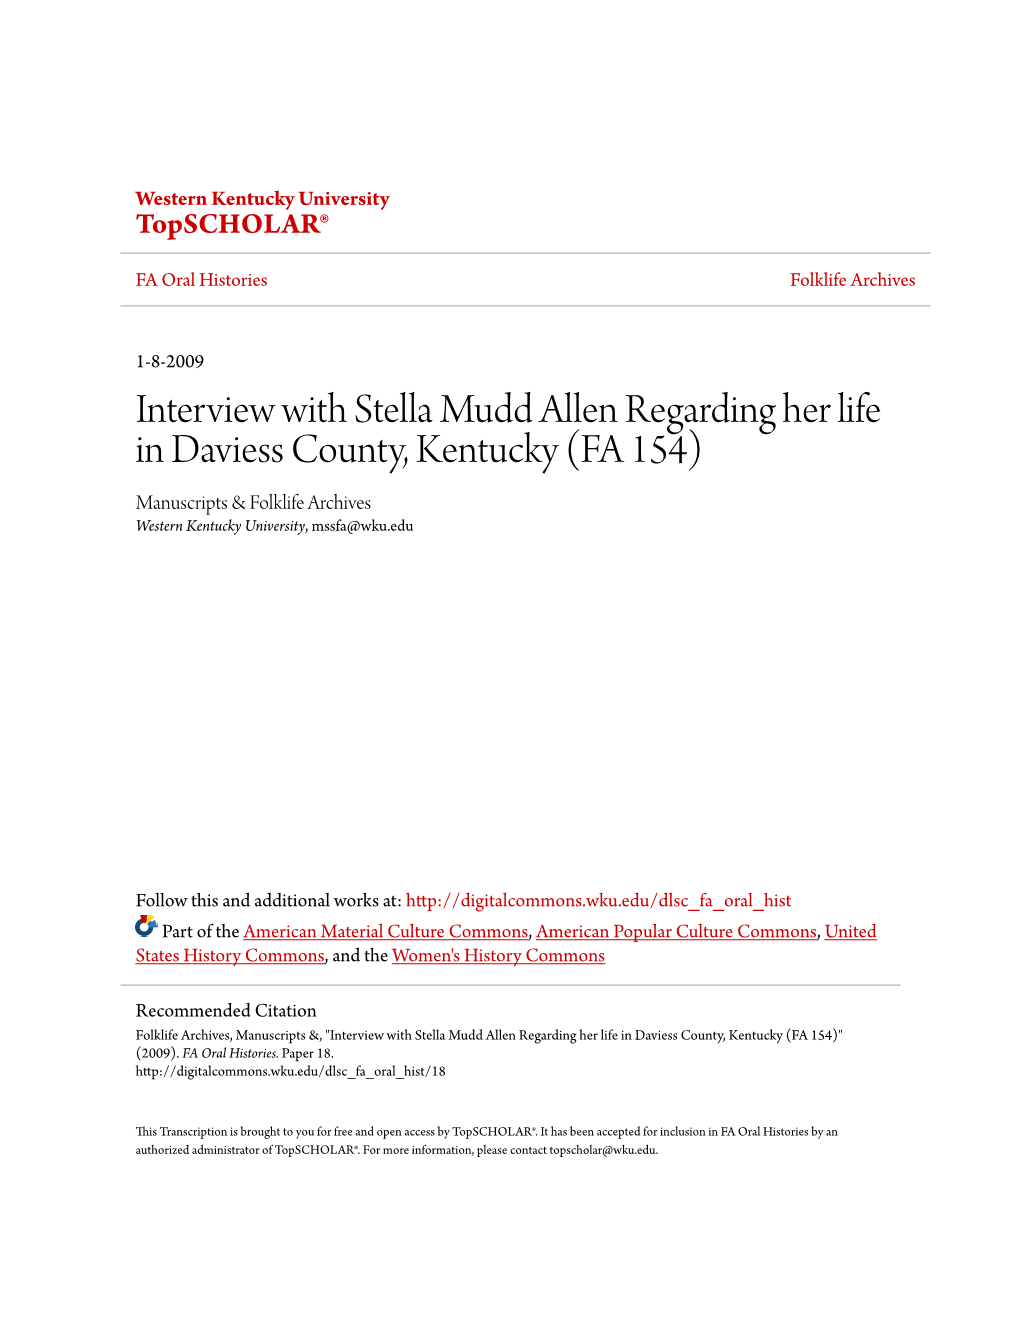 Interview with Stella Mudd Allen Regarding Her Life in Daviess County, Kentucky (FA 154) Manuscripts & Folklife Archives Western Kentucky University, Mssfa@Wku.Edu